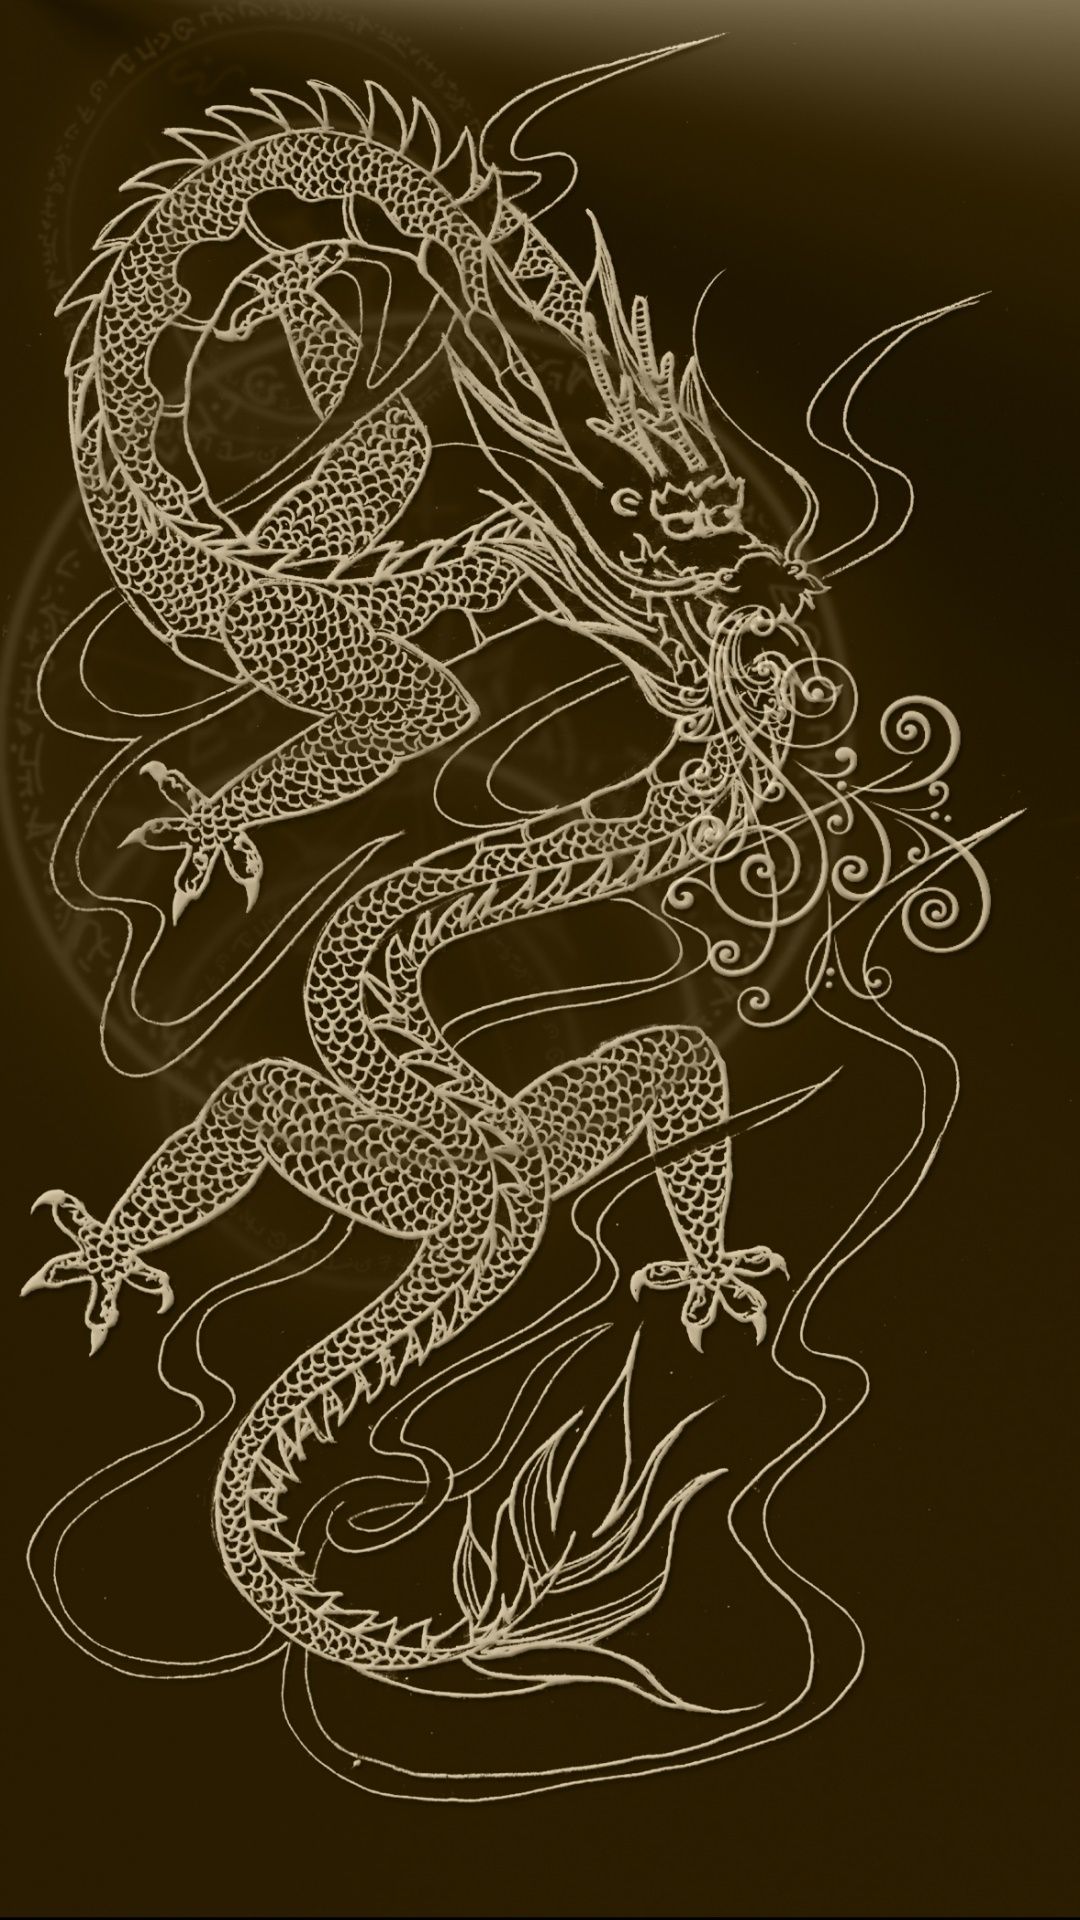 Wallpaper / Fantasy Dragon Phone Wallpaper, , 1080x1920 free download